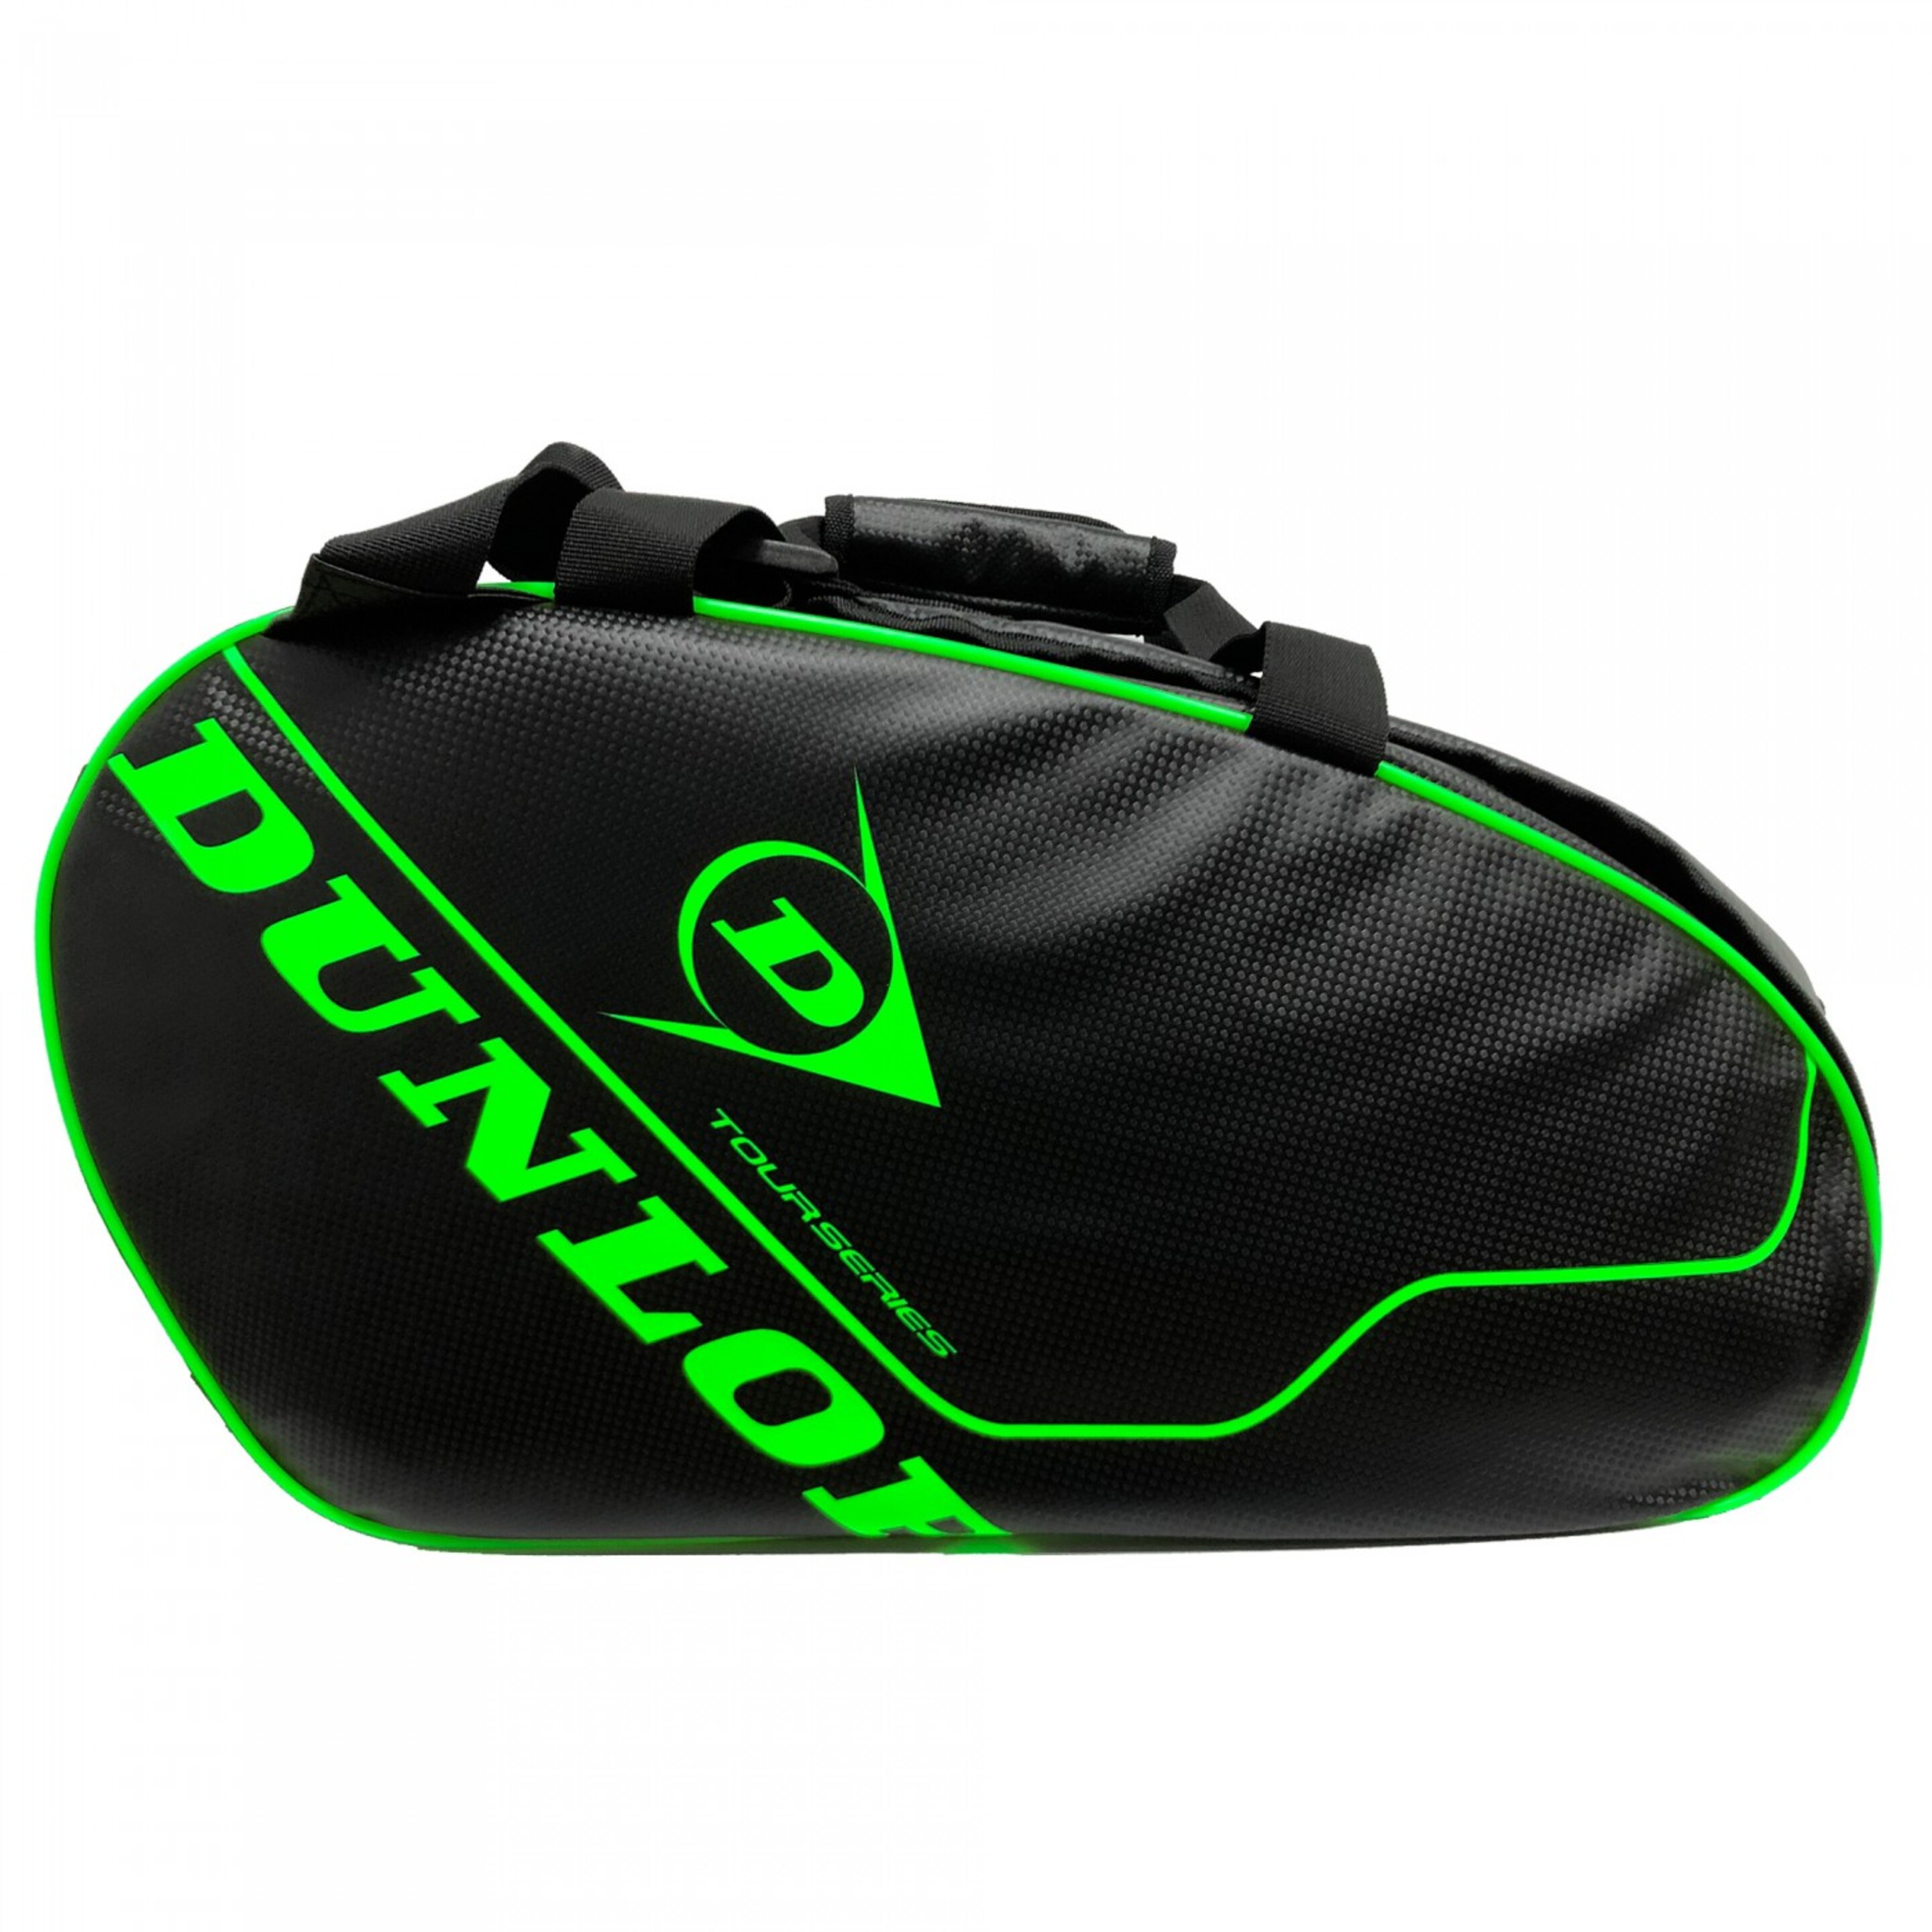 Paletero Dunlop Tour Intro Carbon - negro-verde - 